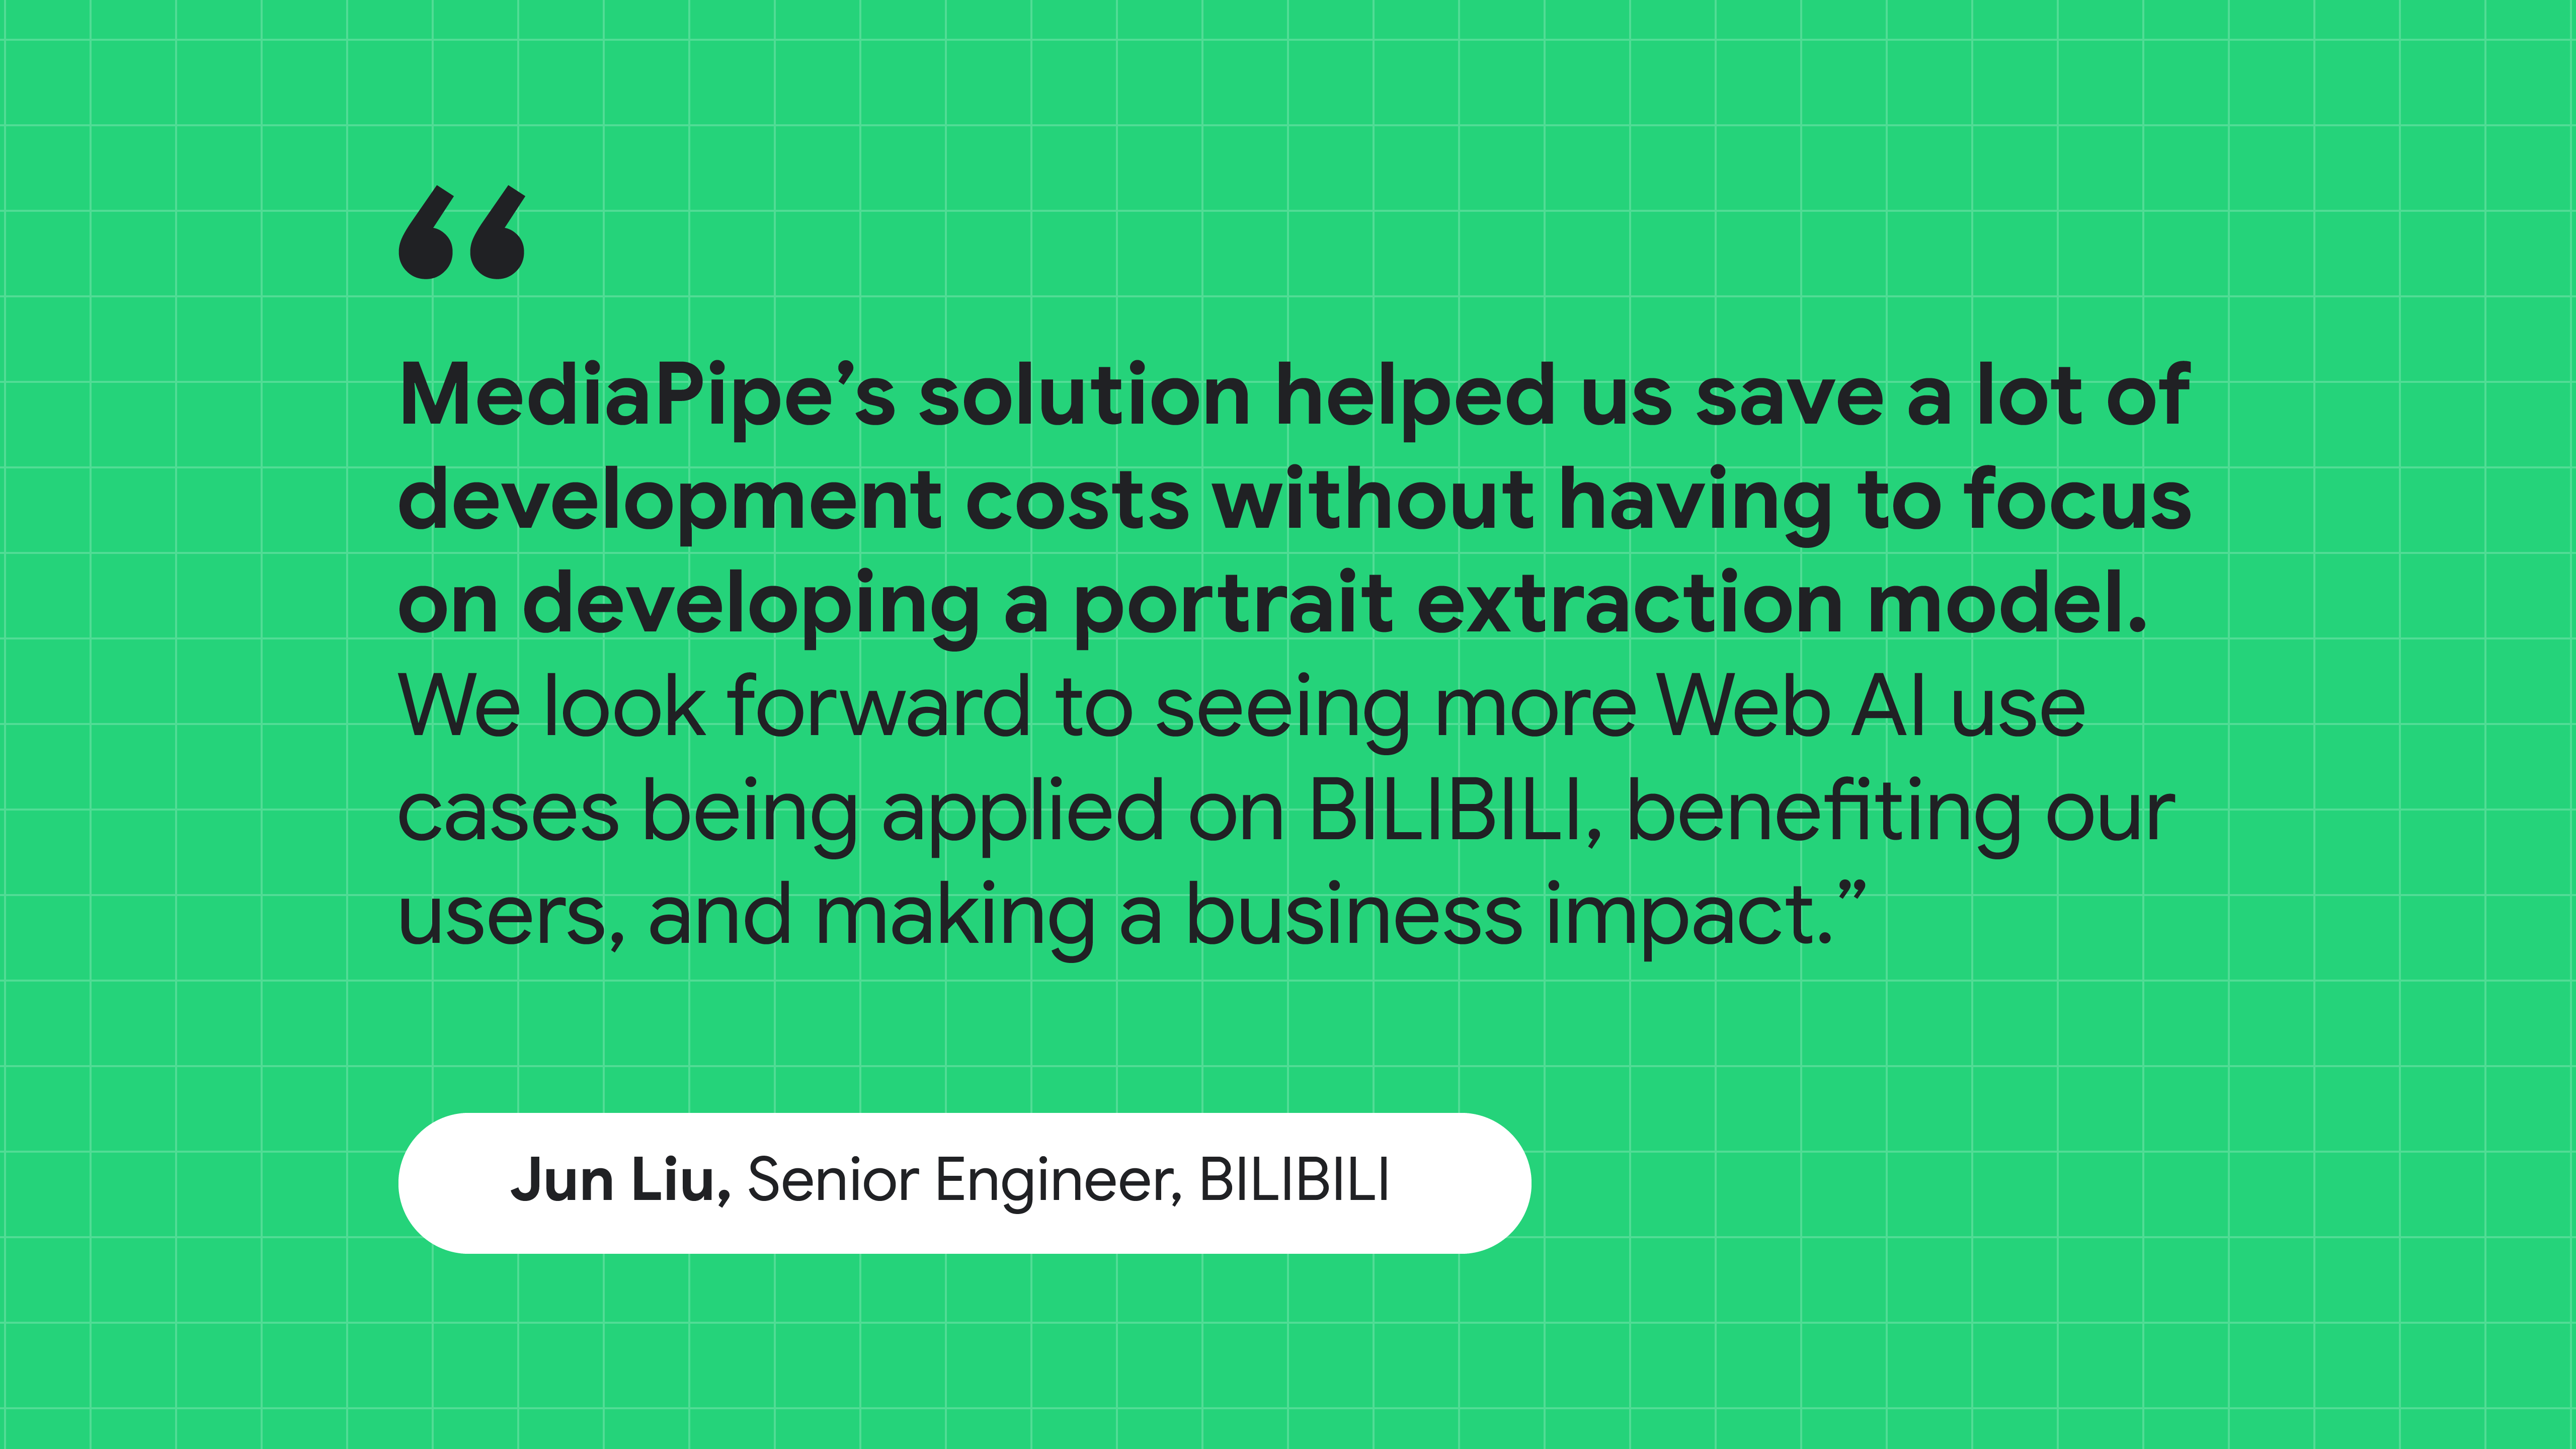 BILIBILI의 선임 엔지니어 준 류의 말 인용: MediaPipe의 솔루션은 인물 사진 추출 모델을 만드는 데 집중하지 않고도 개발 비용을 절감하는 데 도움이 되었습니다.